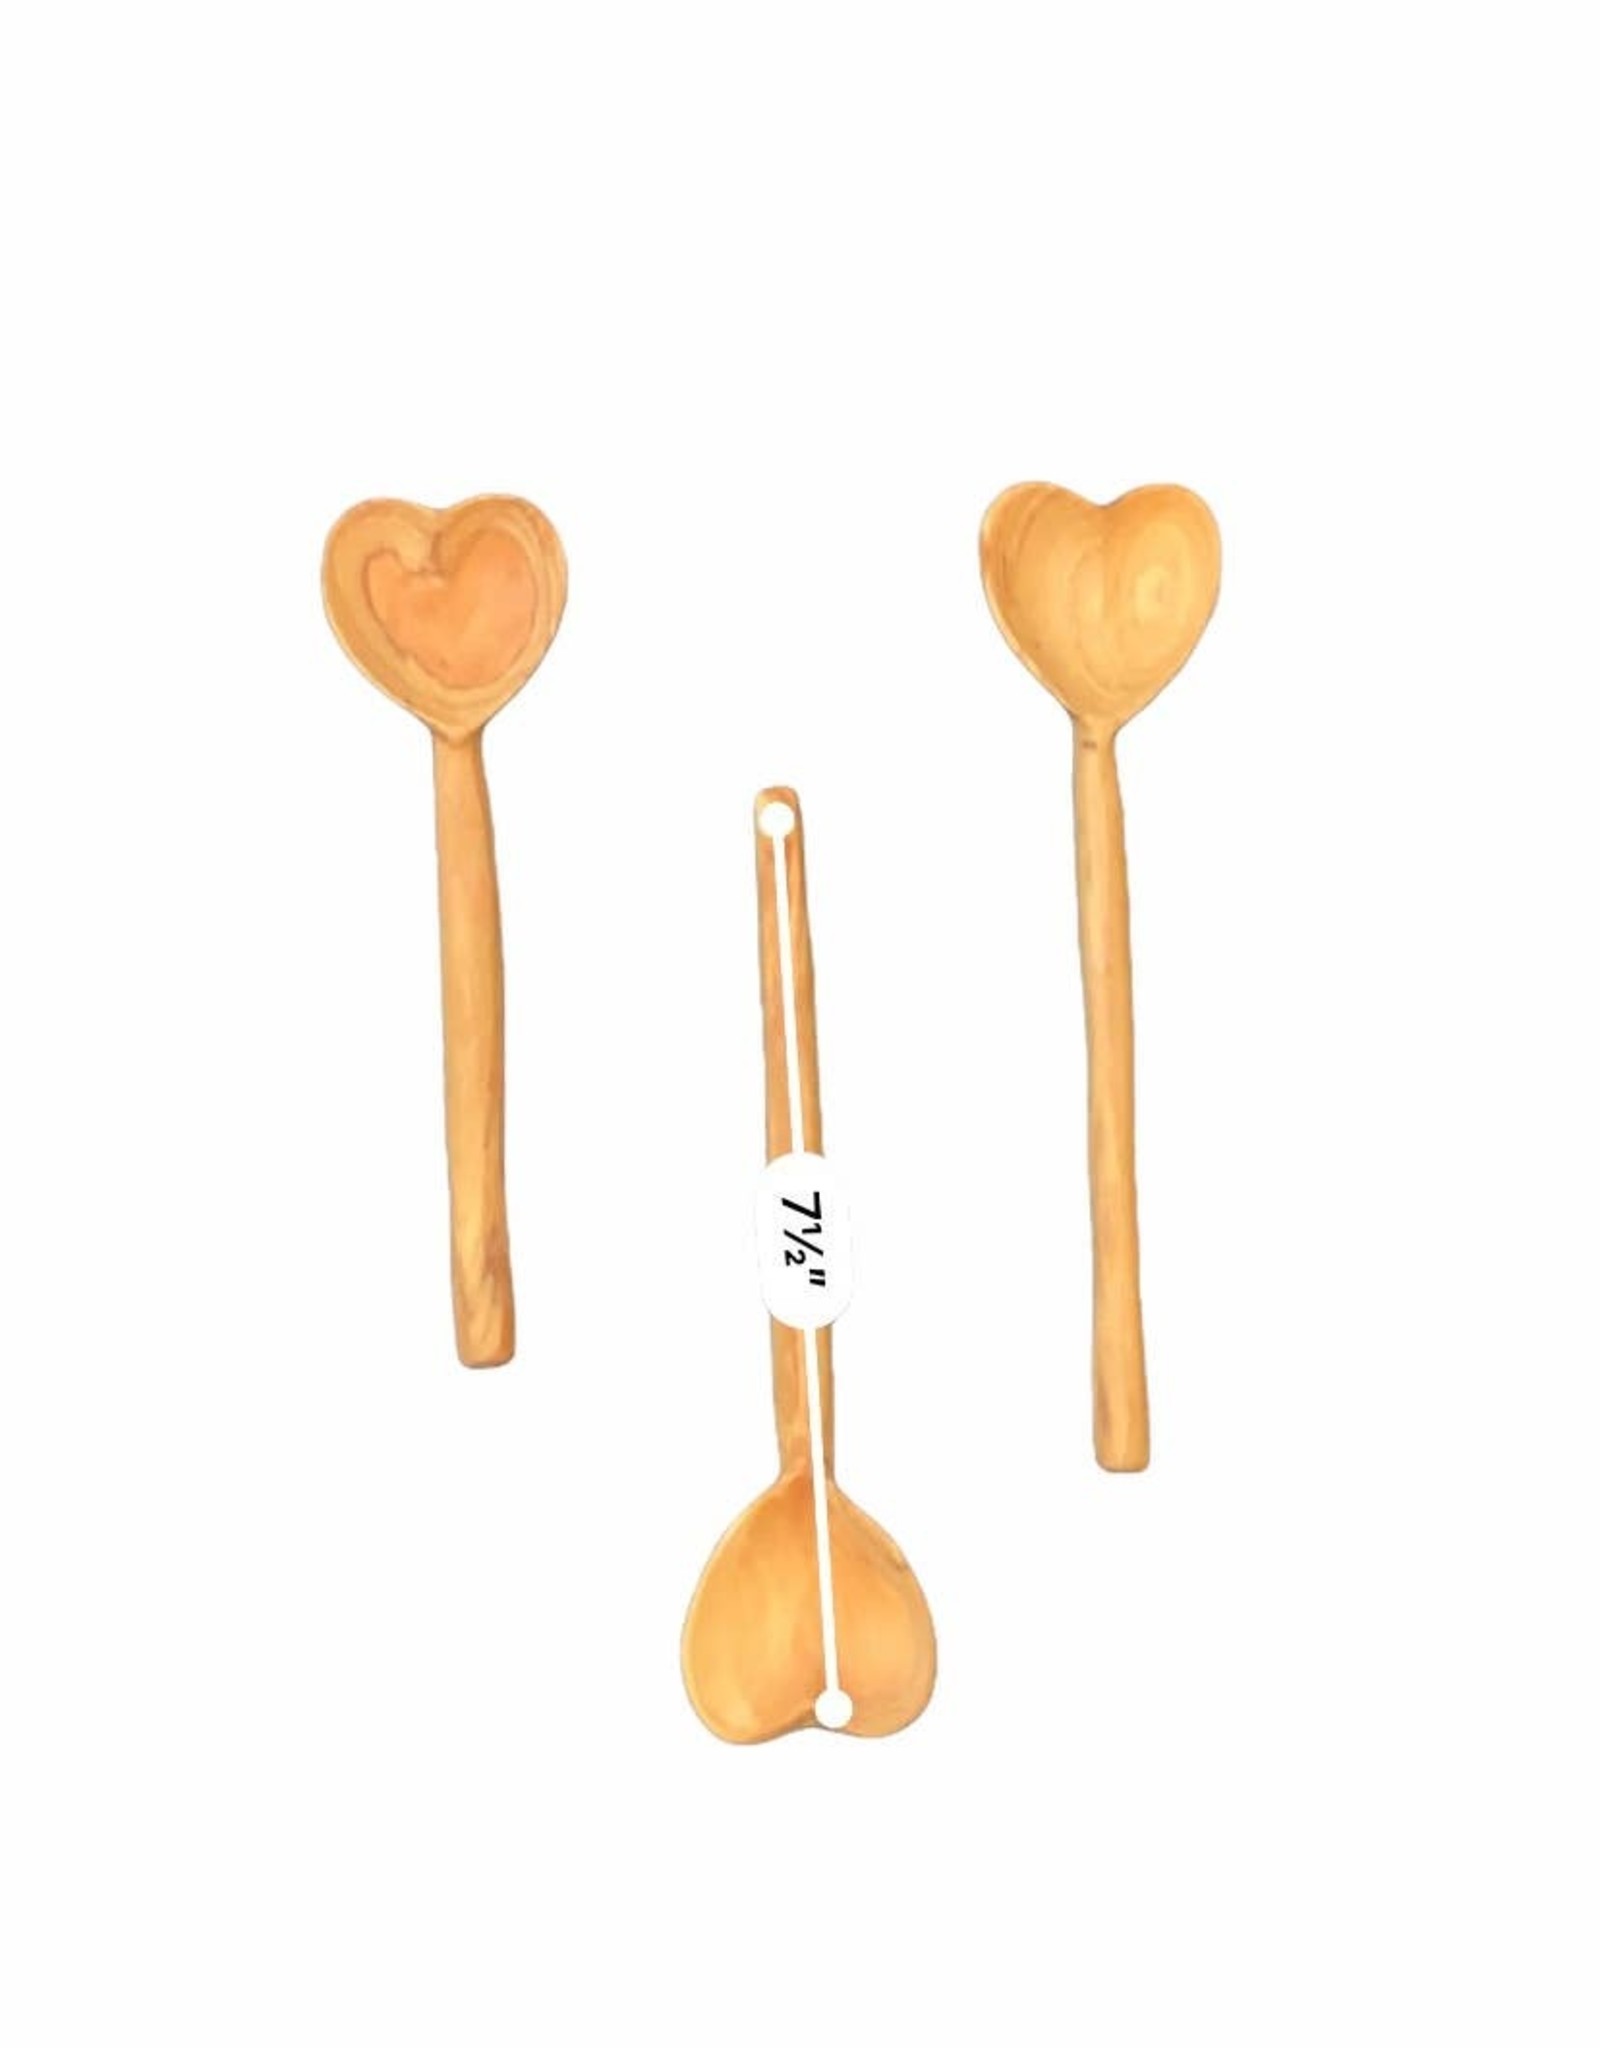 Harkiss Designs Heart Wooden Table Spoon